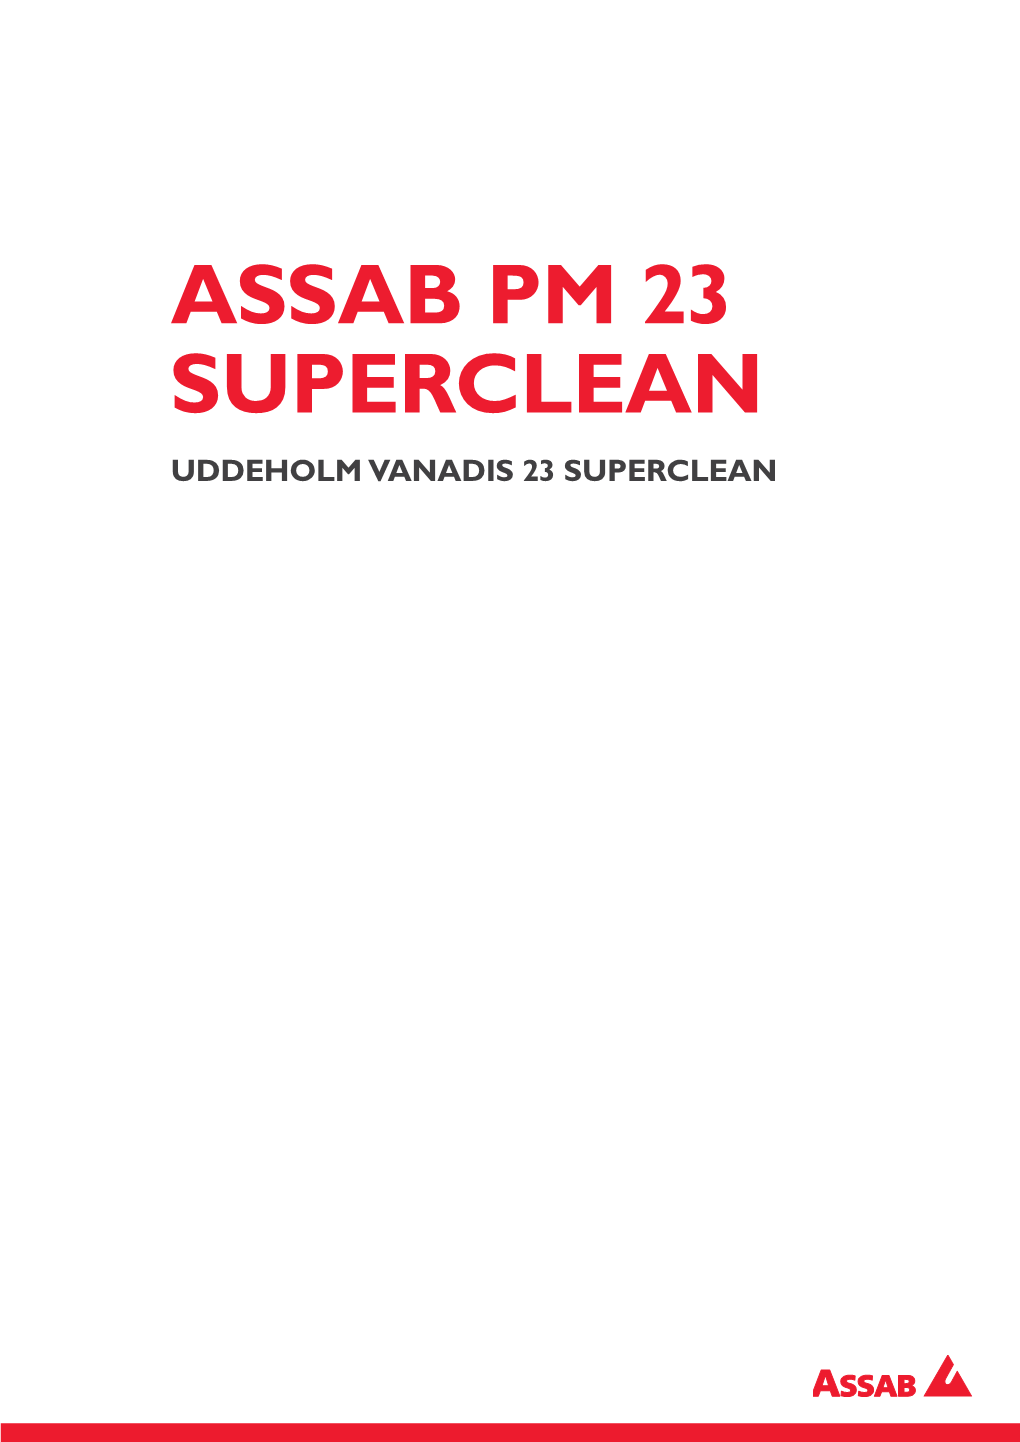 Assab Pm 23 Superclean Uddeholm Vanadis 23 Superclean Reference Standard